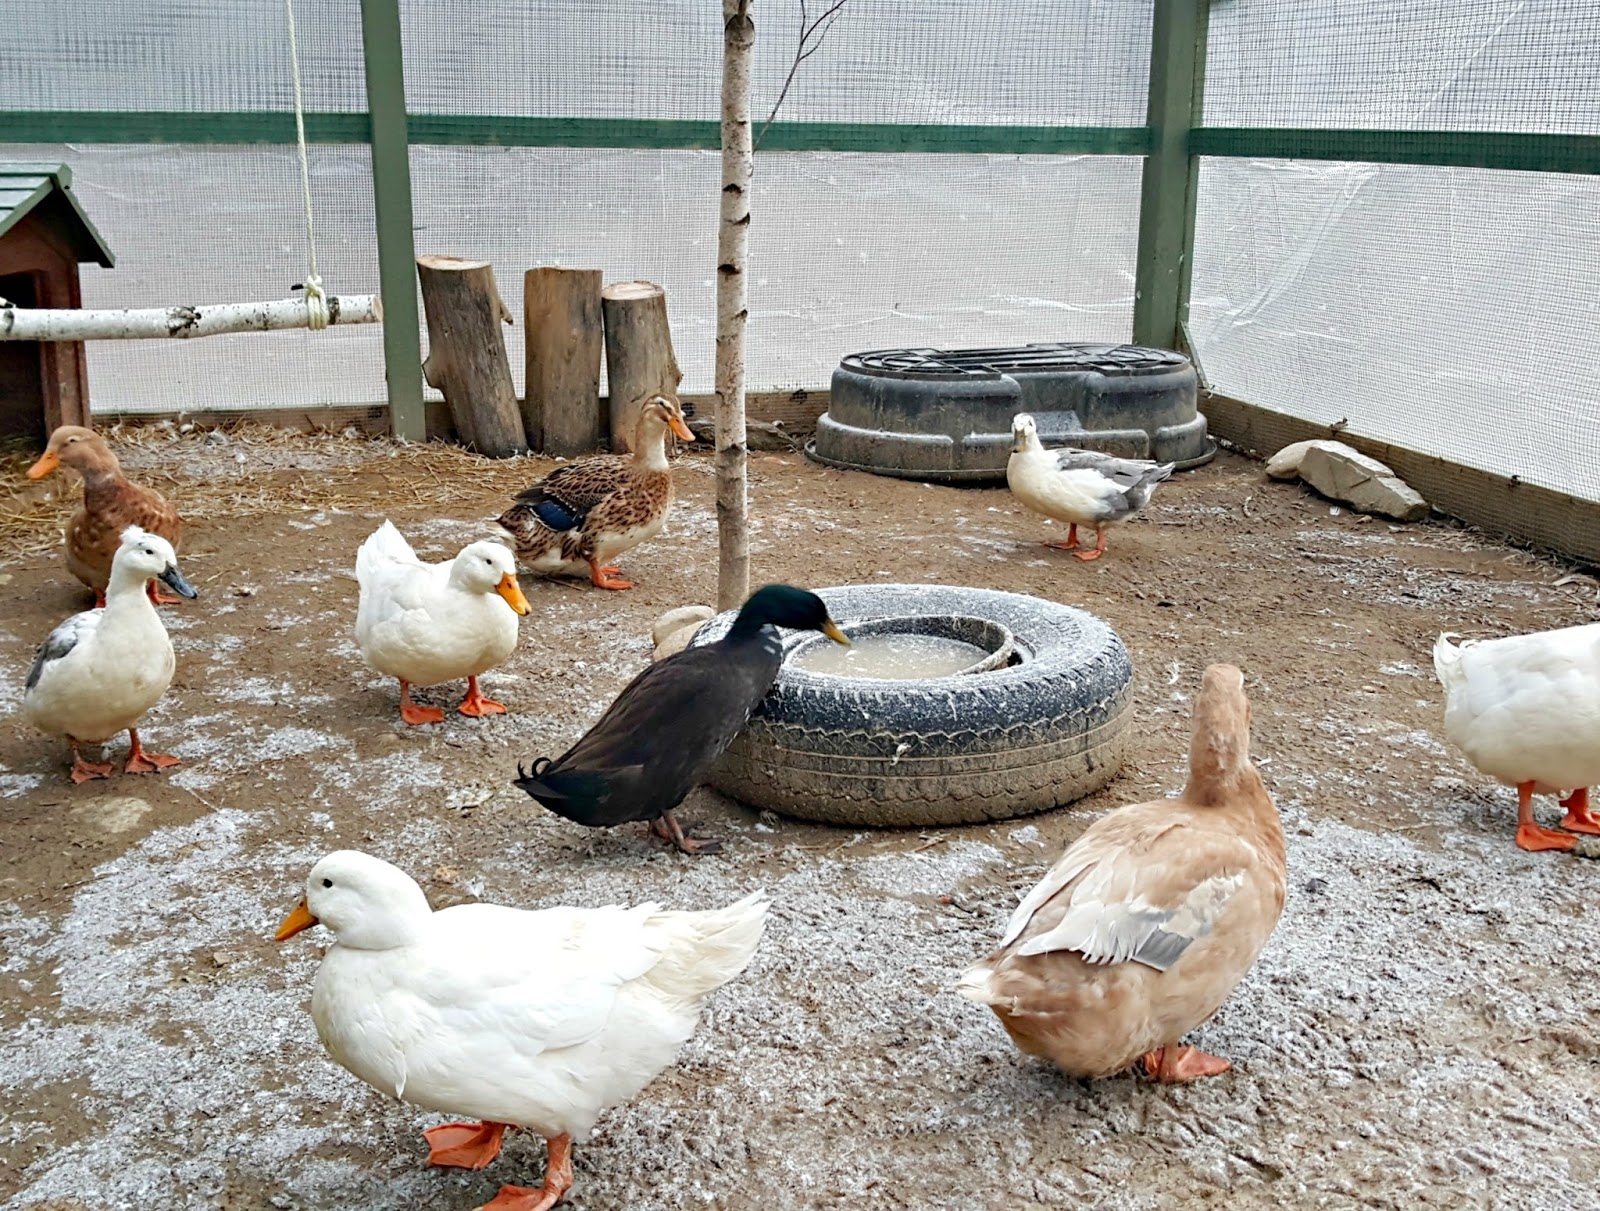 Ducks in winter photo